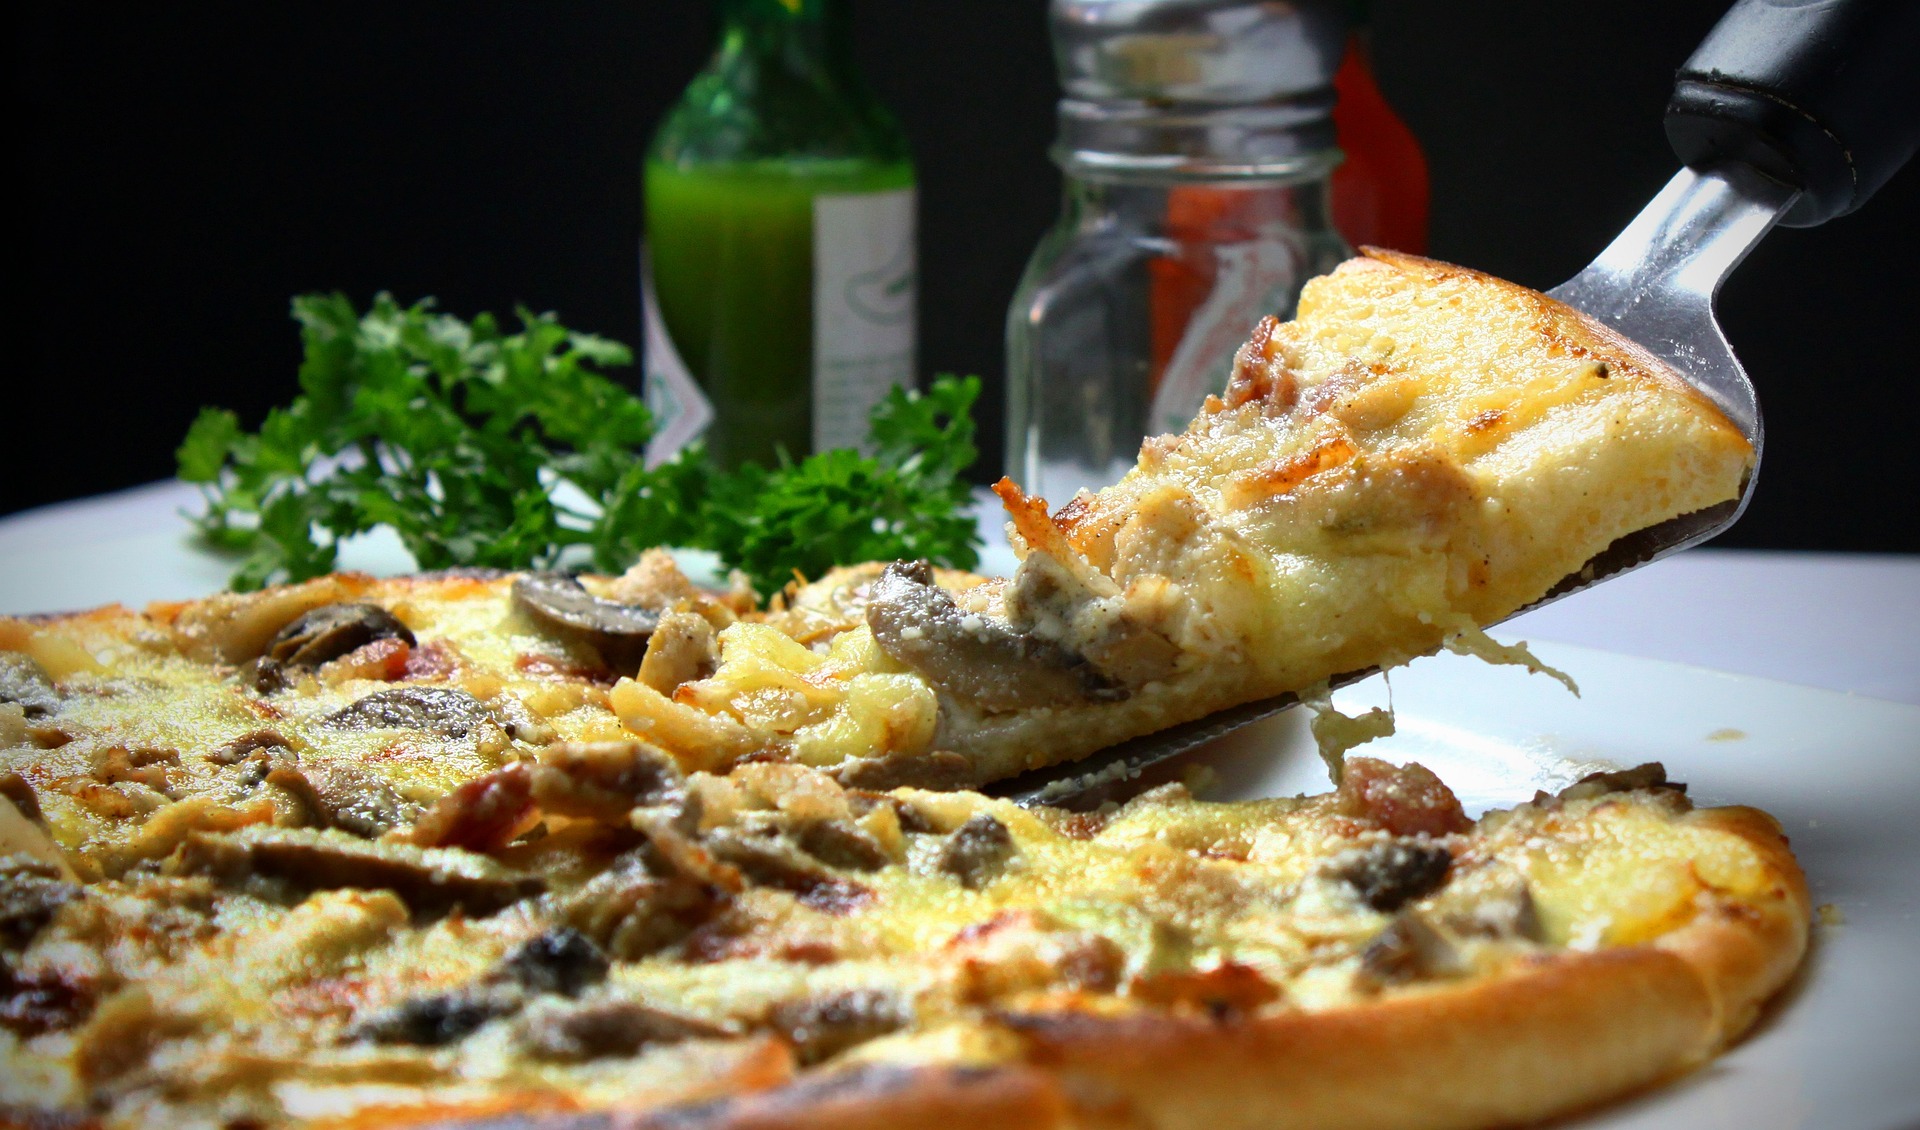 Eurostat: Pizza rose by 16% in the EU in December